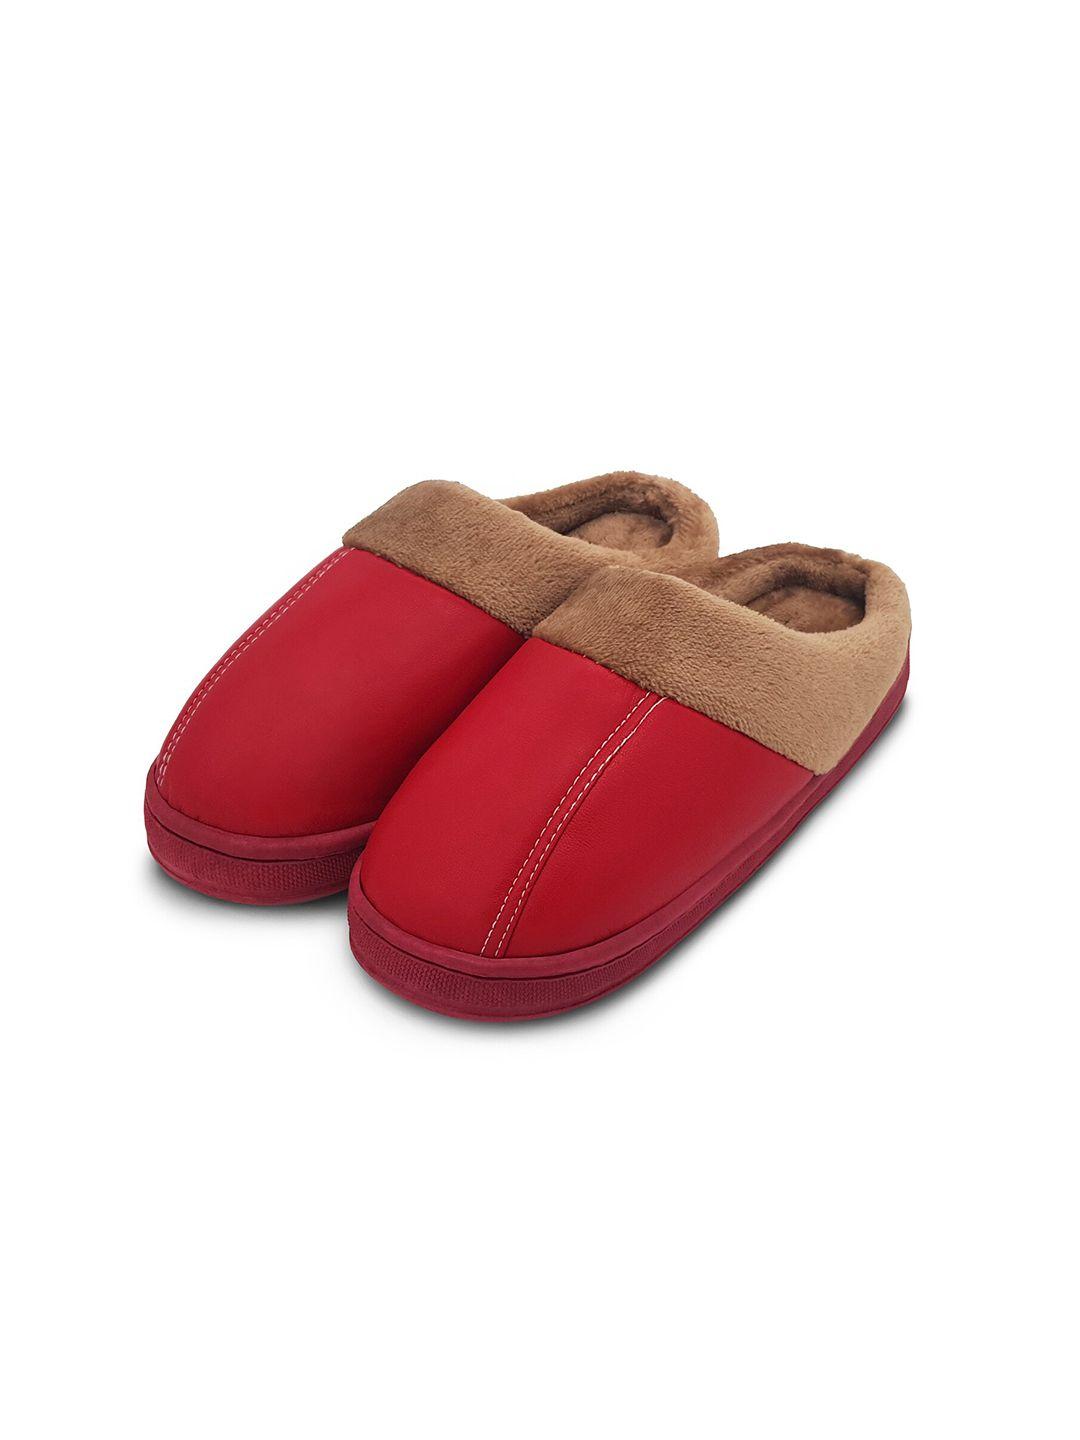 jenna men comfort closed toe fur room slippers